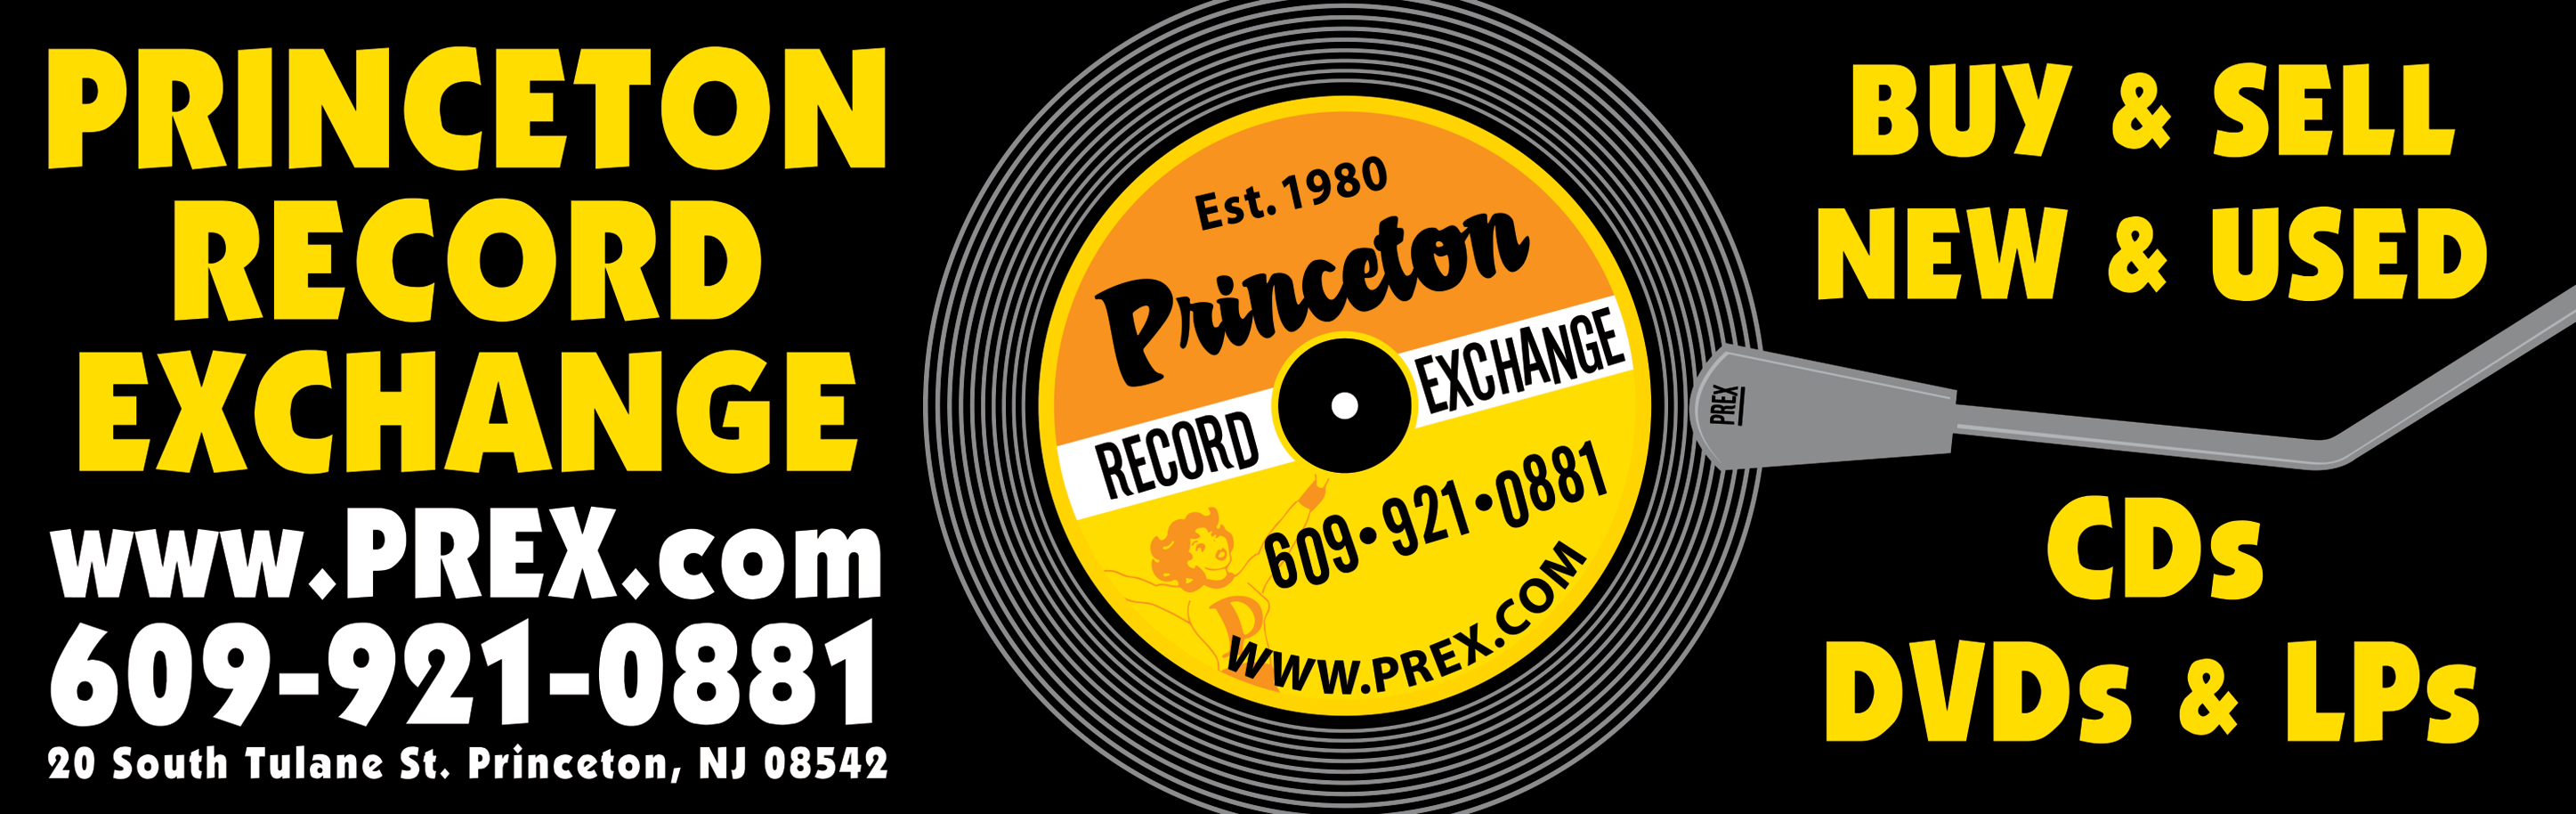 Princeton Record Exchange Print Ad